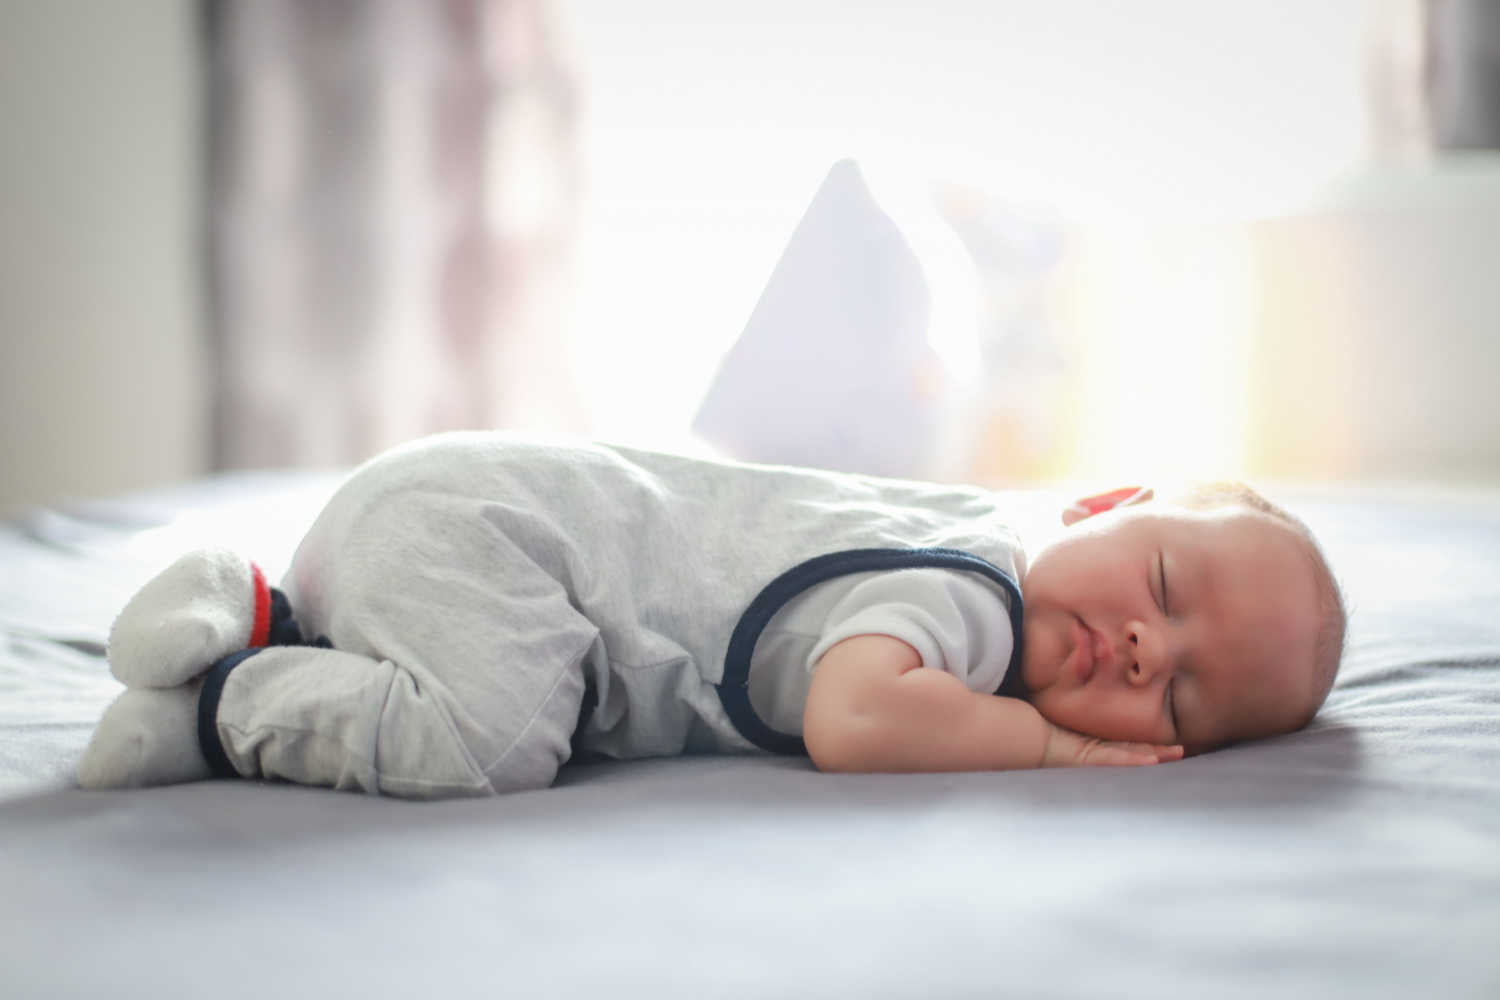 Babies Sleep on Their Stomachs Safely